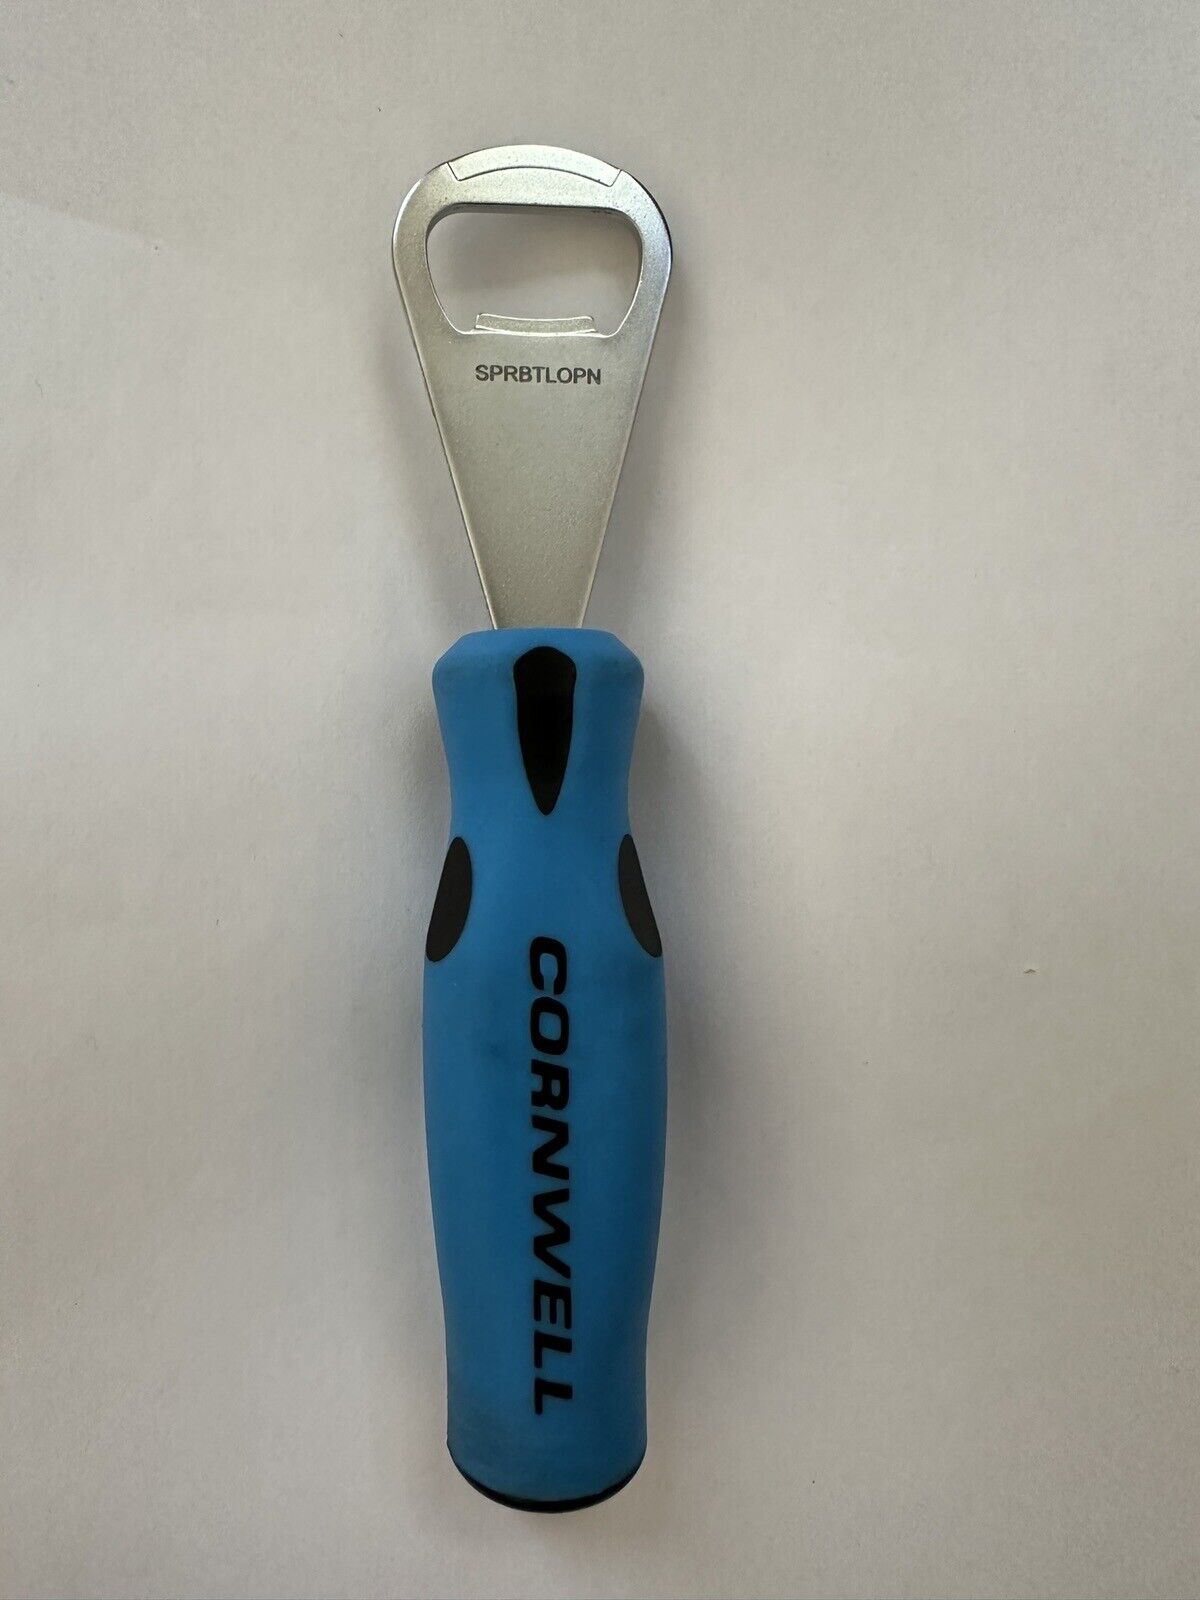 New  Cornwell Tool Brand Bottle Opener, Screwdriver Tool Handle.